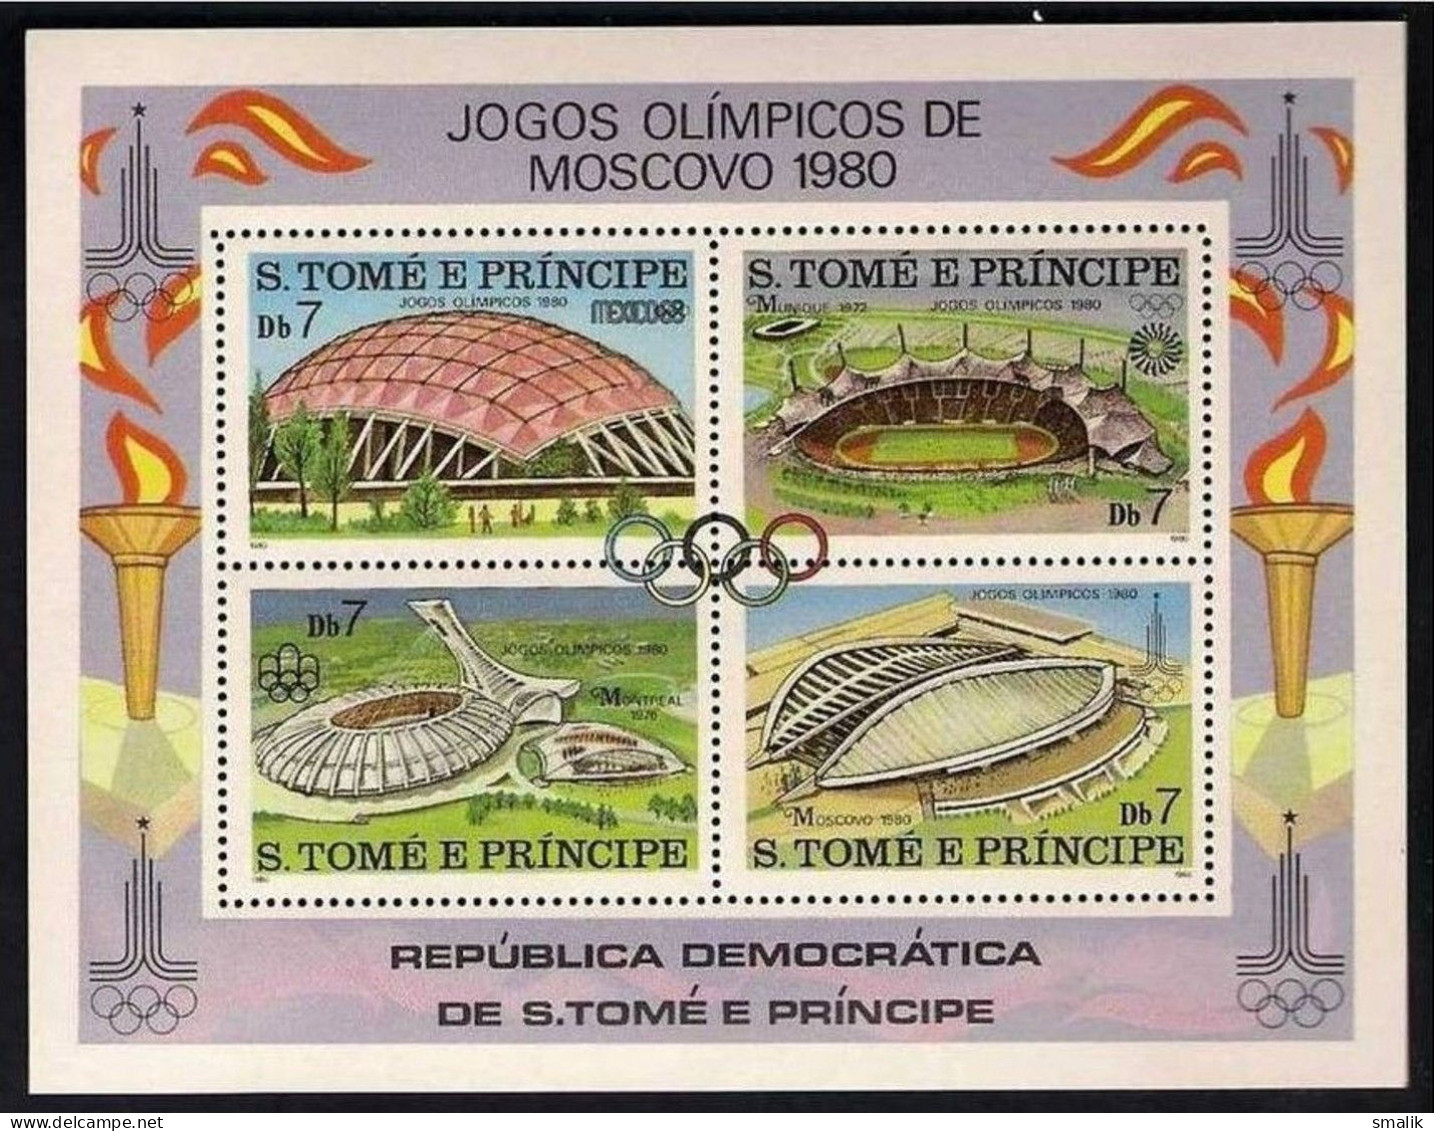 S. TOME E PRINCIPE SAO 1980 - Moscow Olympic Games, Stadium, Miniature Sheet MNH - Sao Tome And Principe